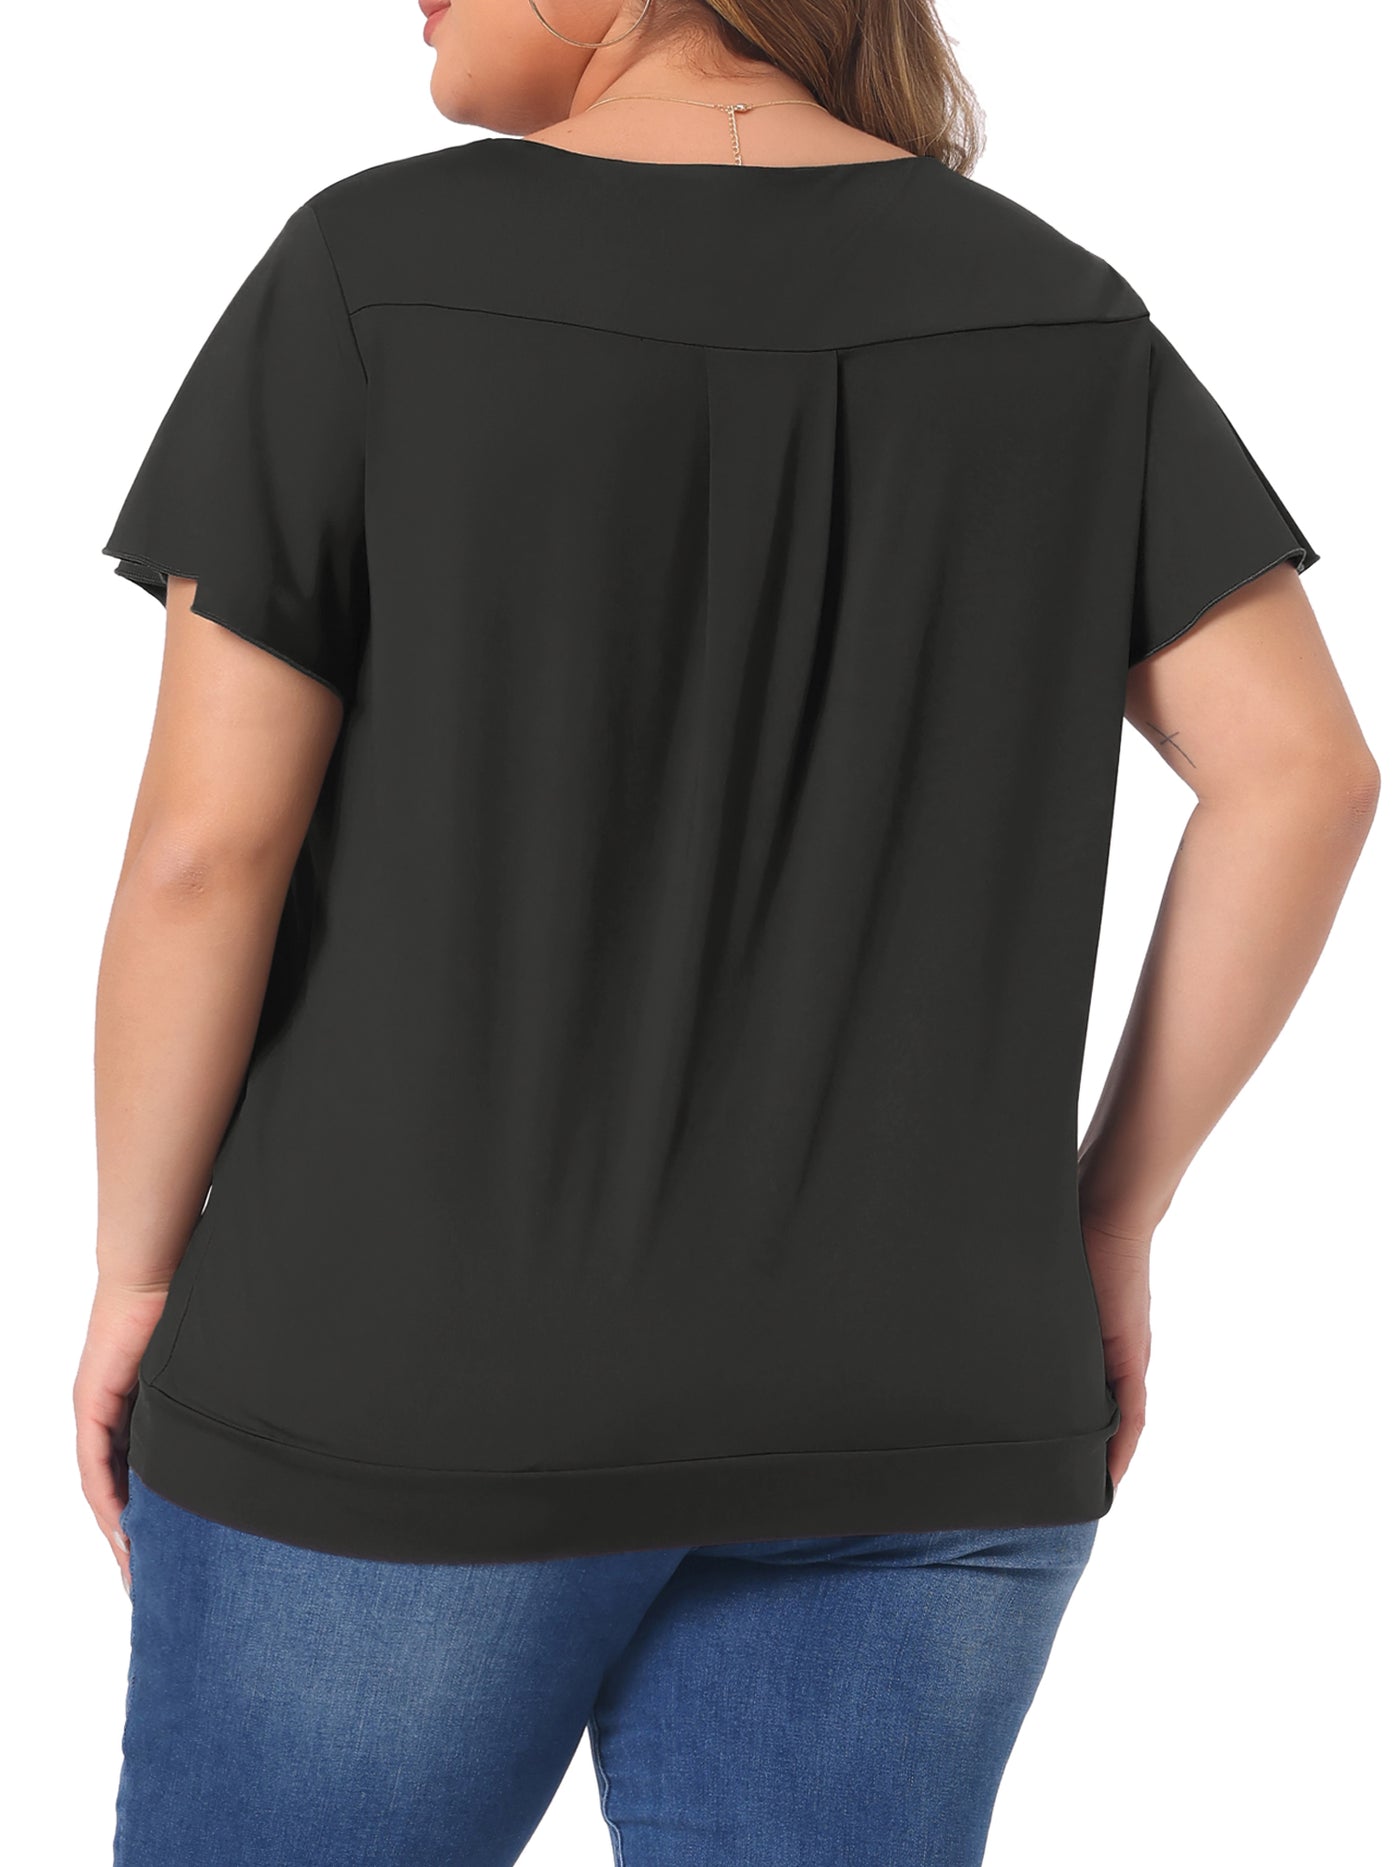 Bublédon Plus Size Top for Women V Neck Ruffle Short Sleeve T Shirt Summer Tee Tops